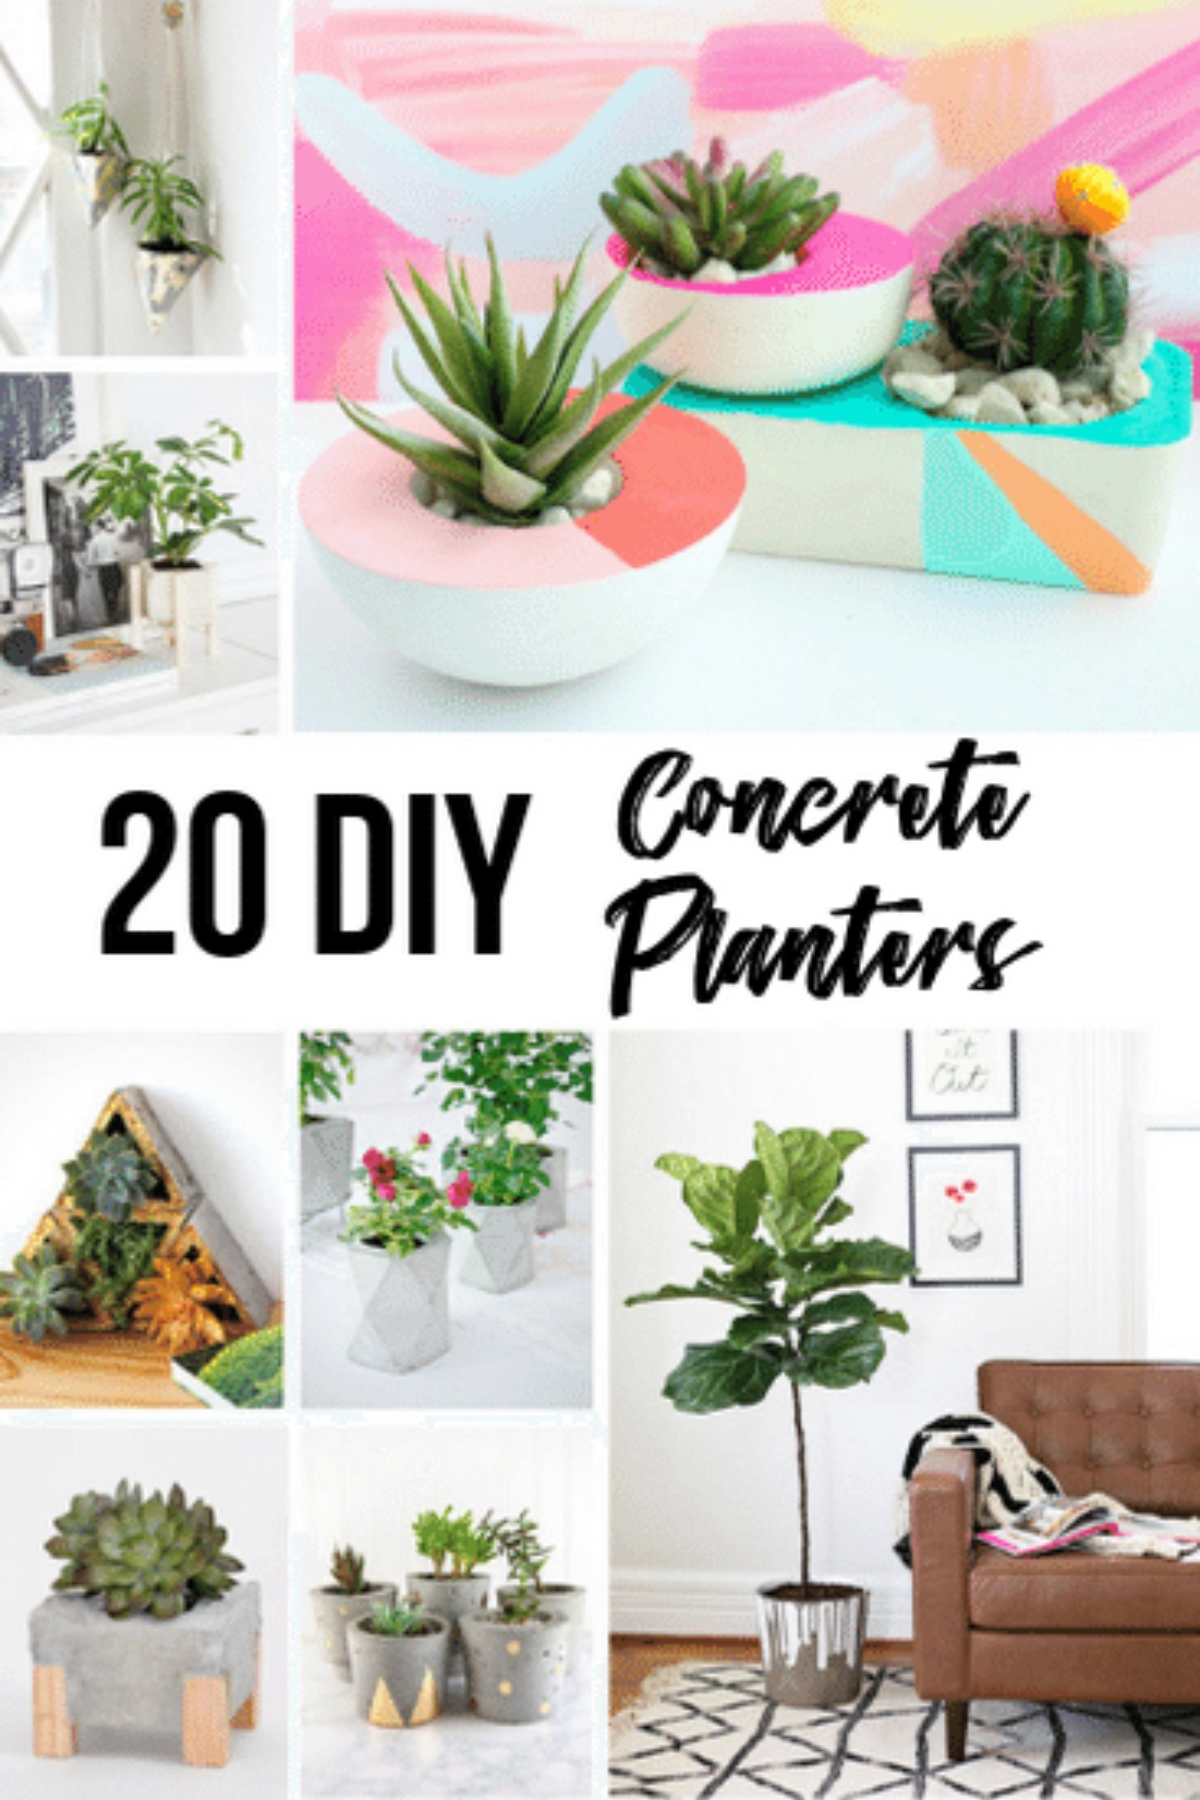 20 DIY concrete planter ideas collage